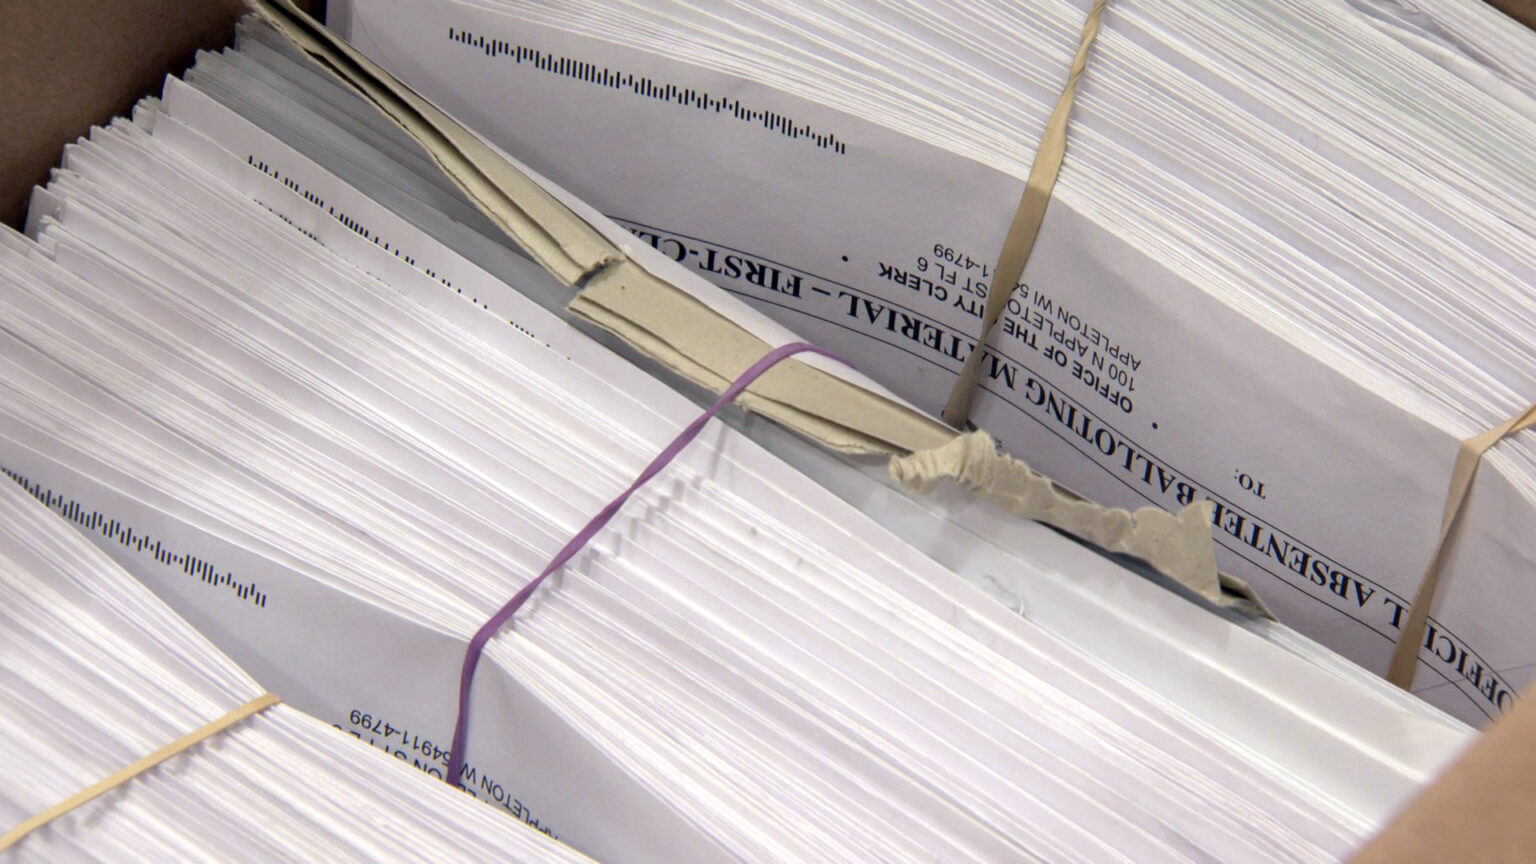 Bundles of absentee ballot envelopes sit inside a cardboard box.